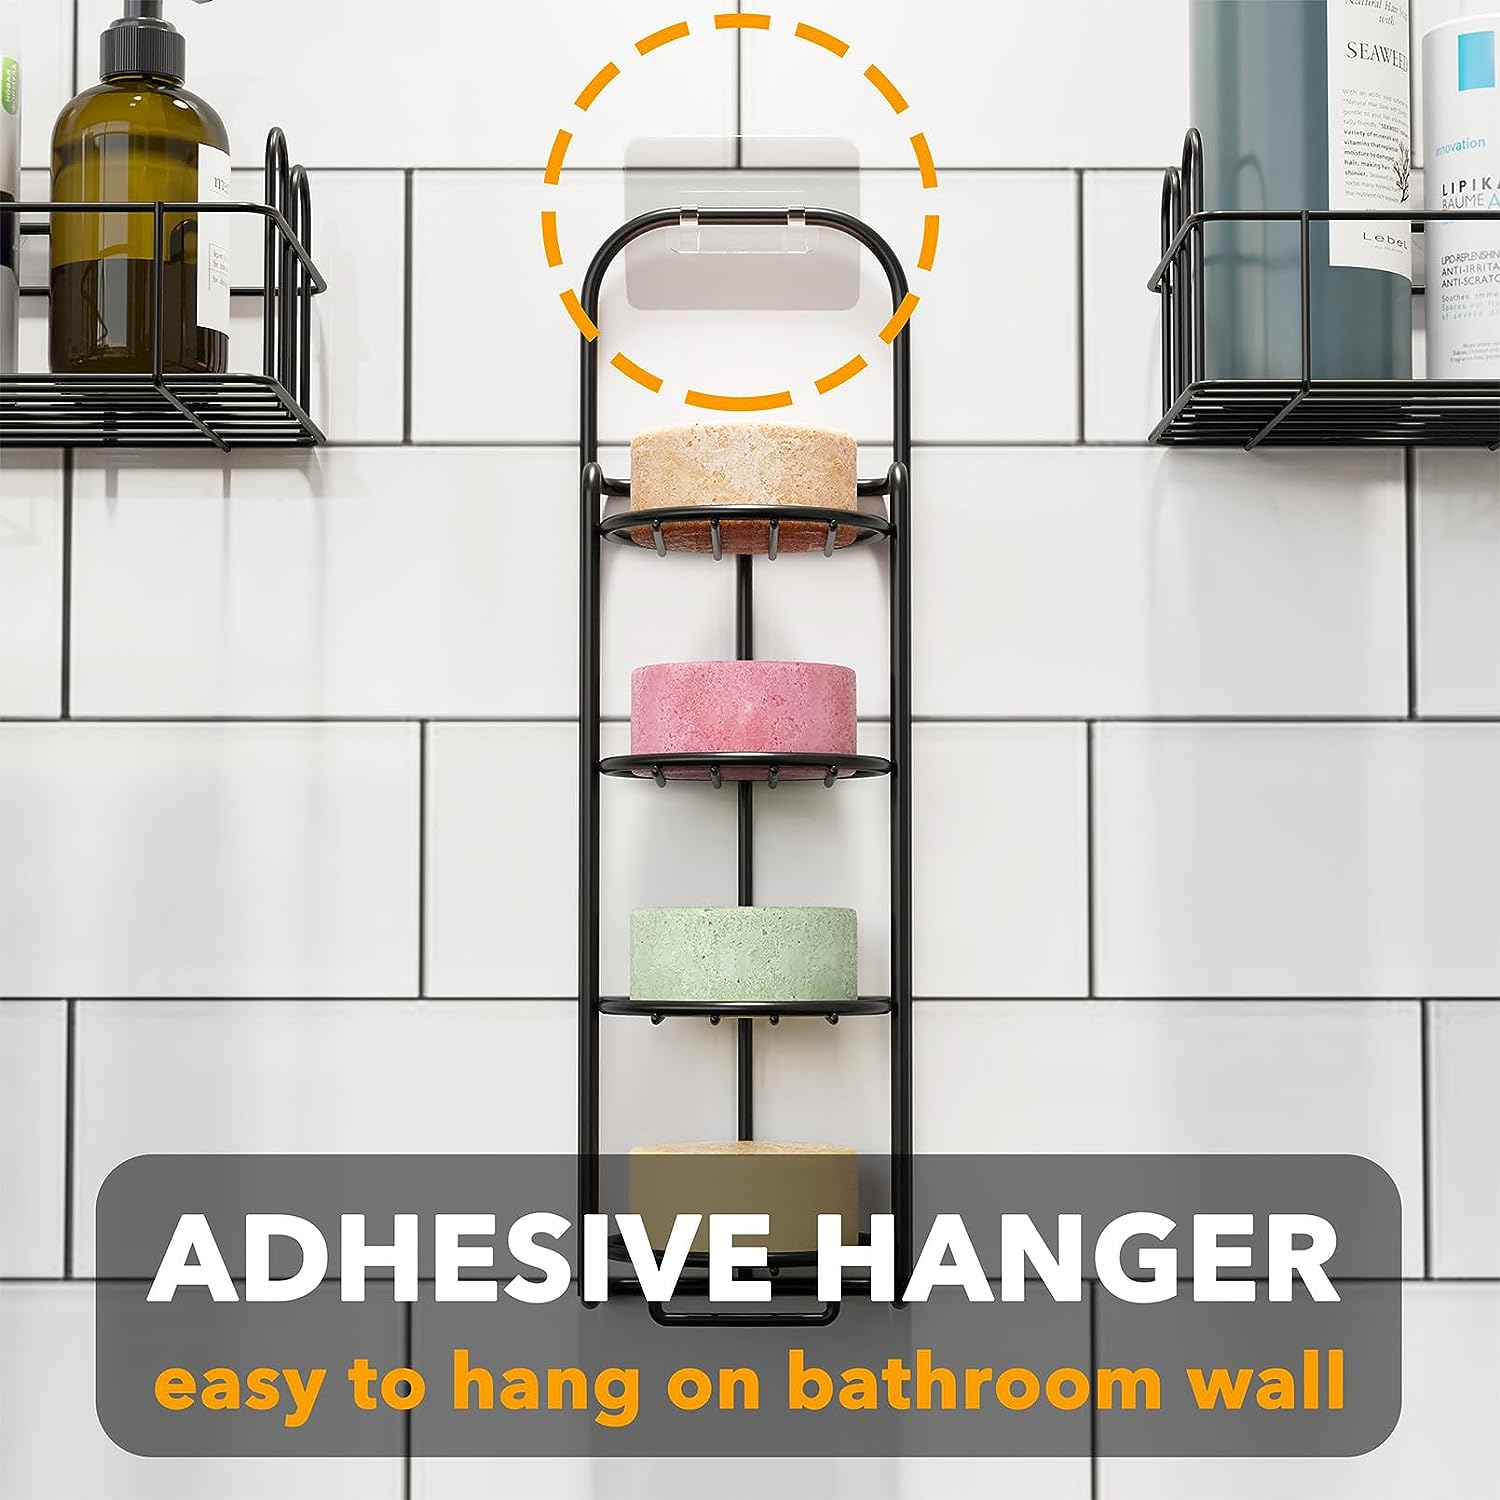 SpaceAid 3 Tier Shampoo Bar Holder for Shower, Self Draining Soap Bar Holders Caddy for Bathroom Wall and Kitchen Sink, Shampoo Bar Dish Rack